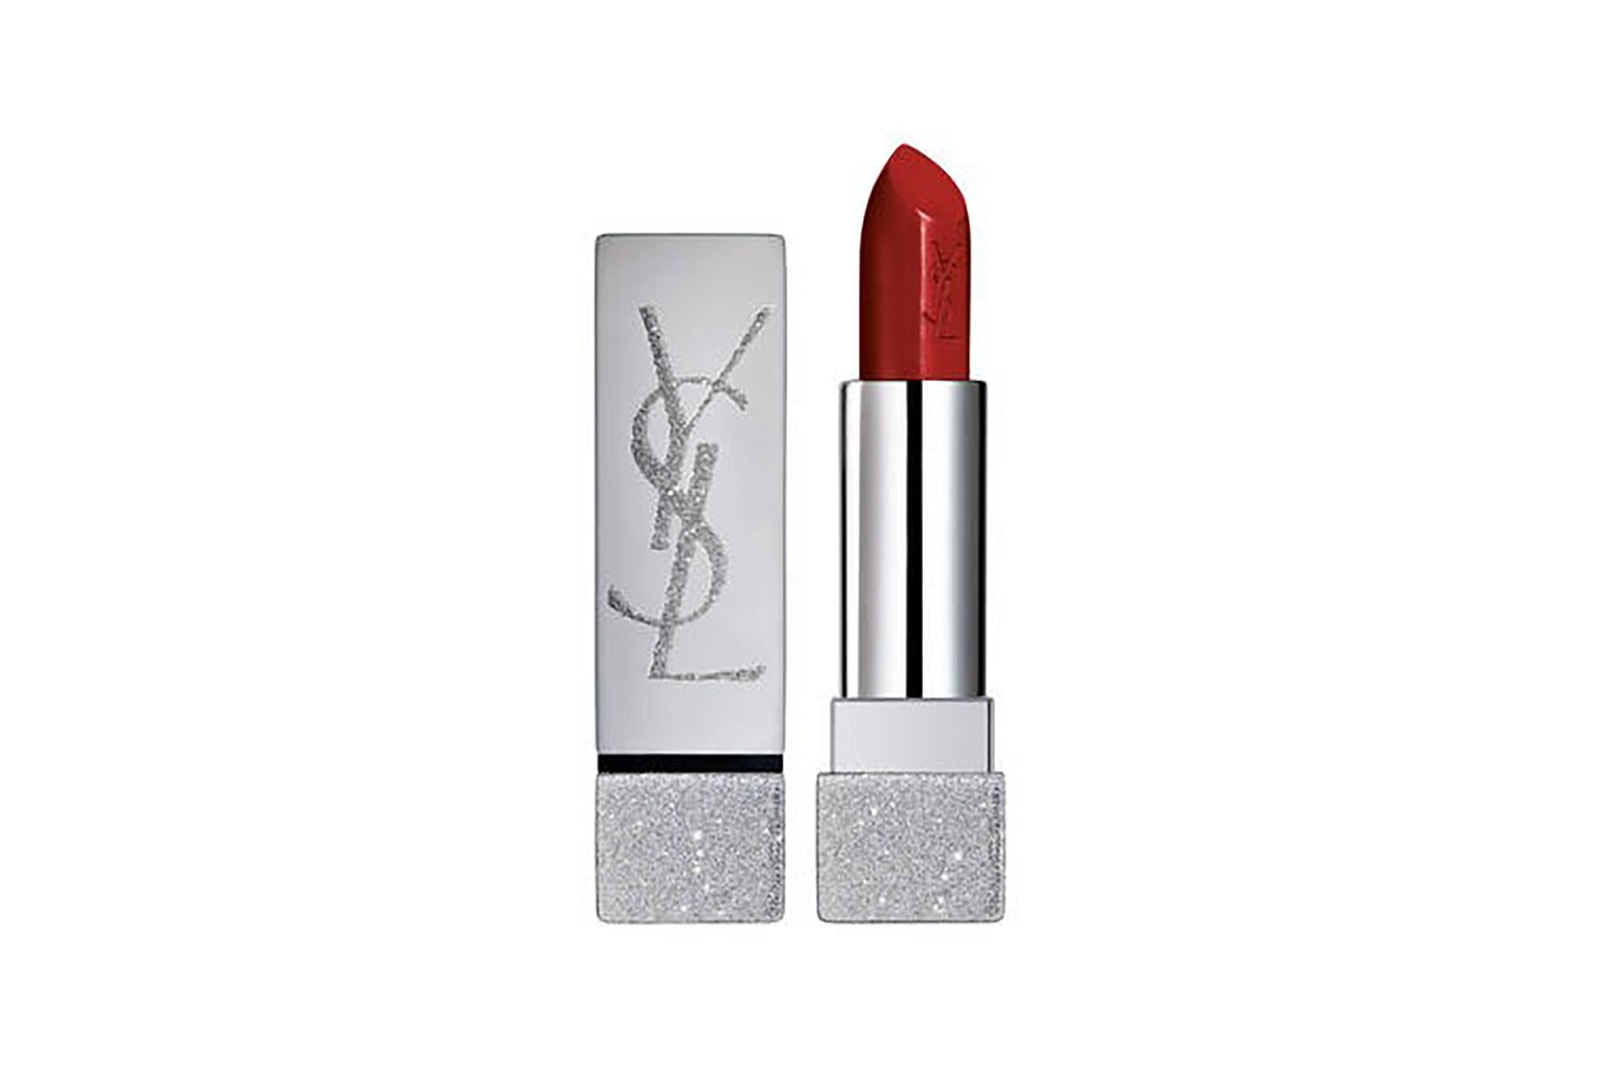 ysl beauty zoe kravitz rouge pur couture lipstick collaboration makeup